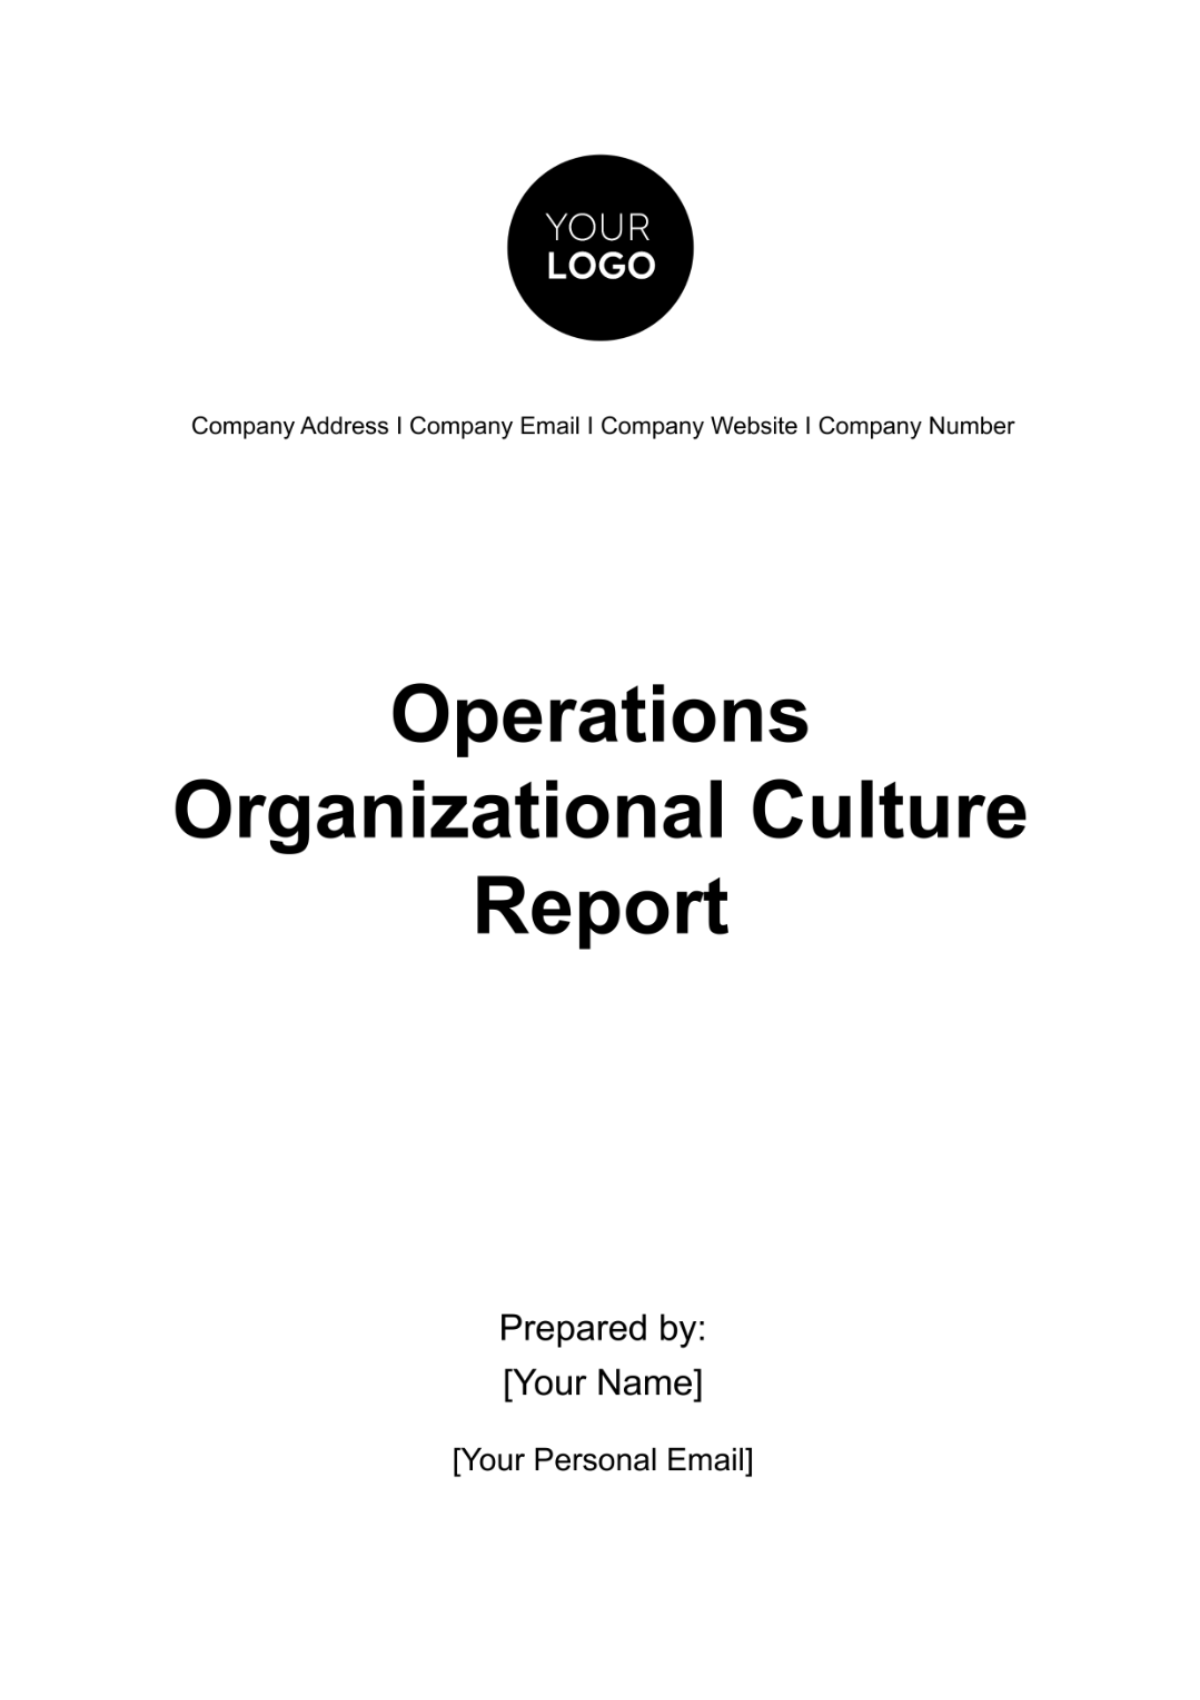 Operations Organizational Culture Report Template